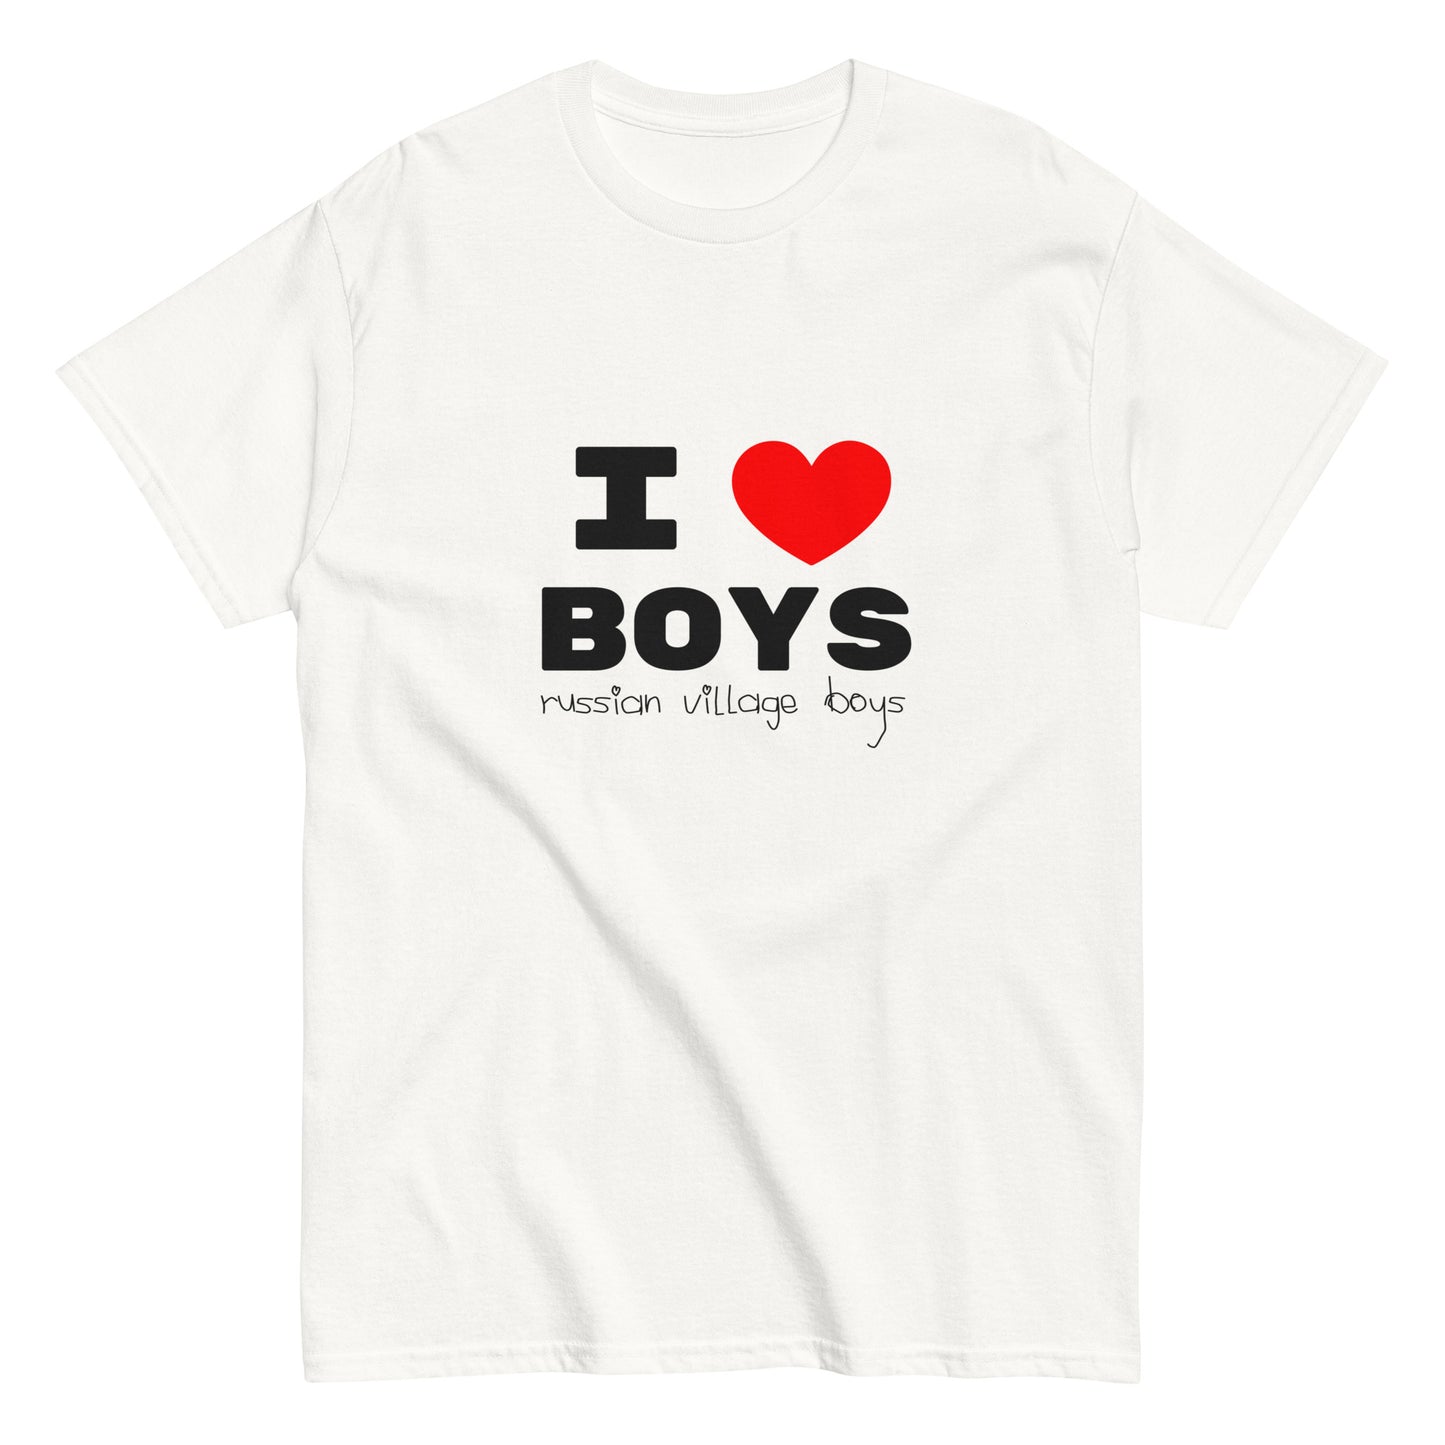 I love boys, russian village boys T-shirt